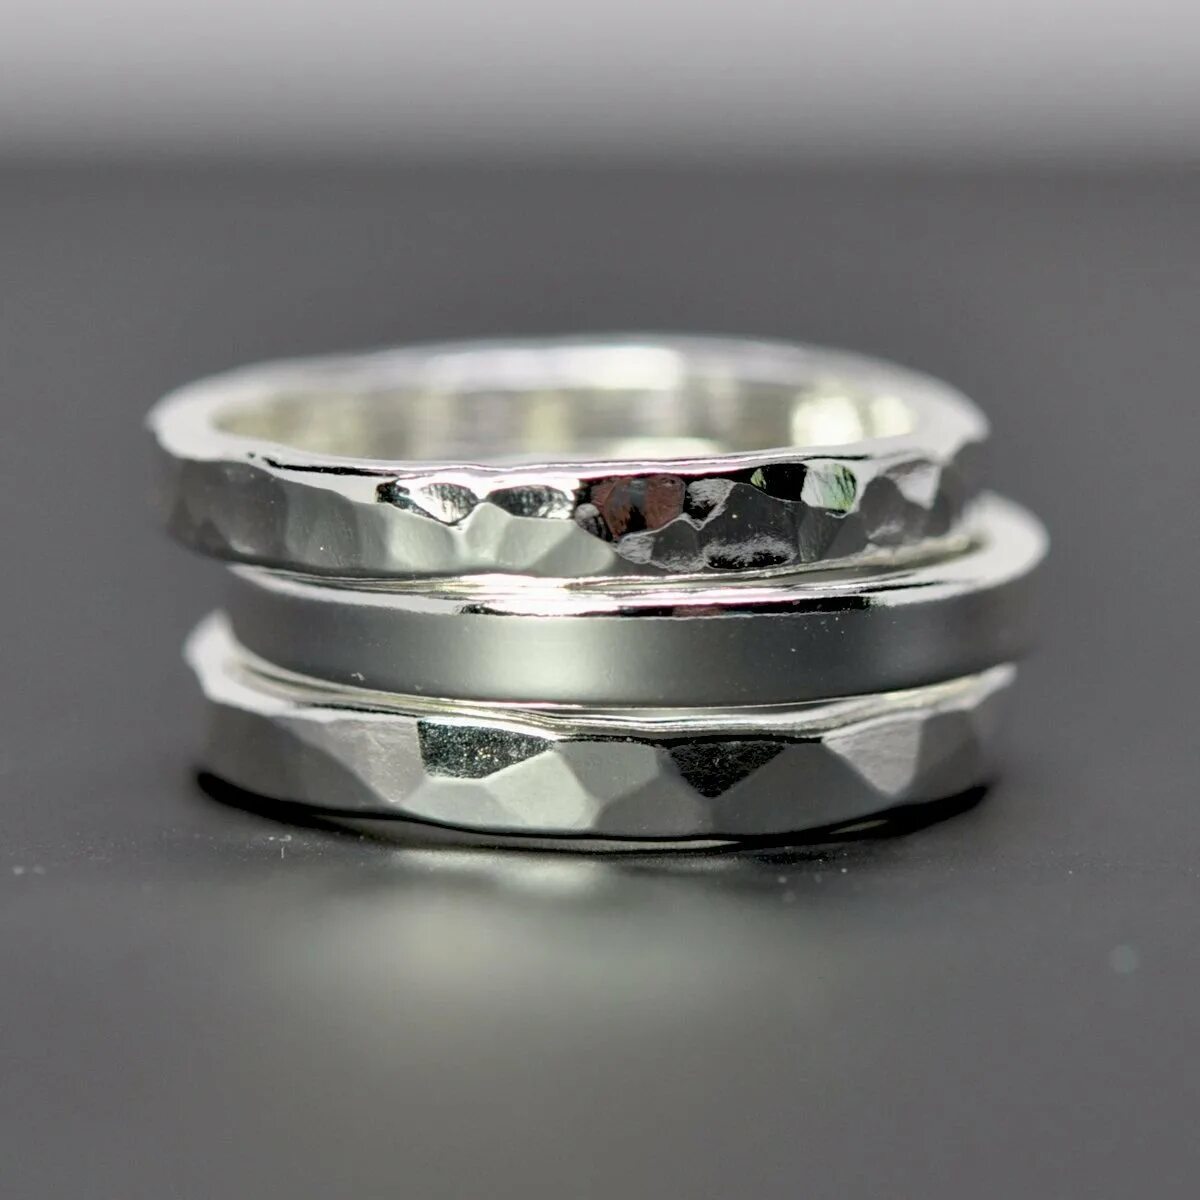 Silver-Silver украшения из серебра. Гликин Silver кольцо. Кольцо : 94012540 серебро. Кольцо серебро 88010067.